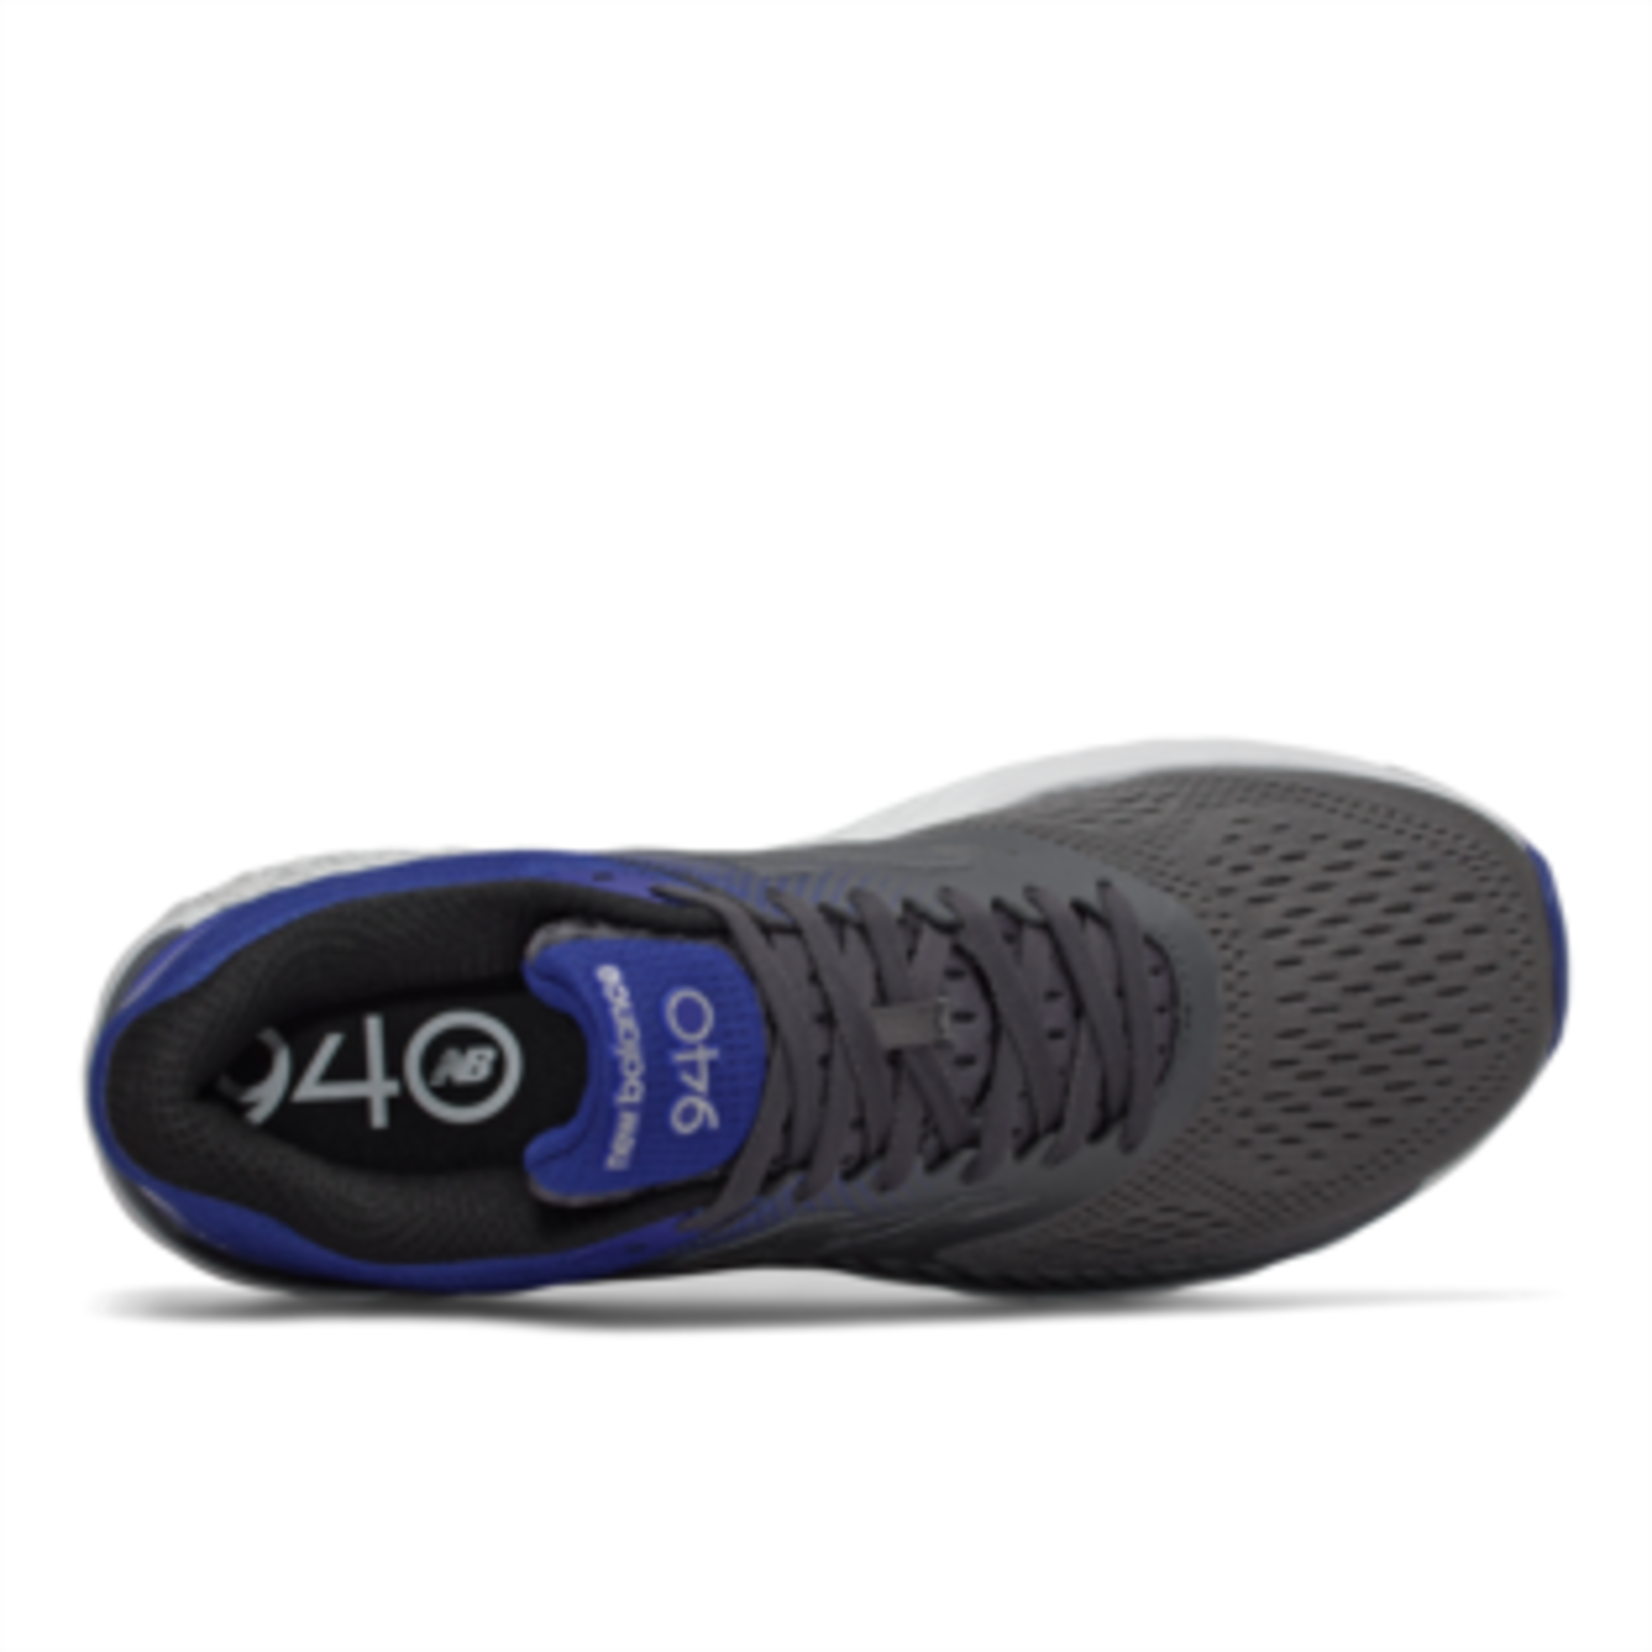 New Balance New Balance Running Shoes, 940 v4, Mens